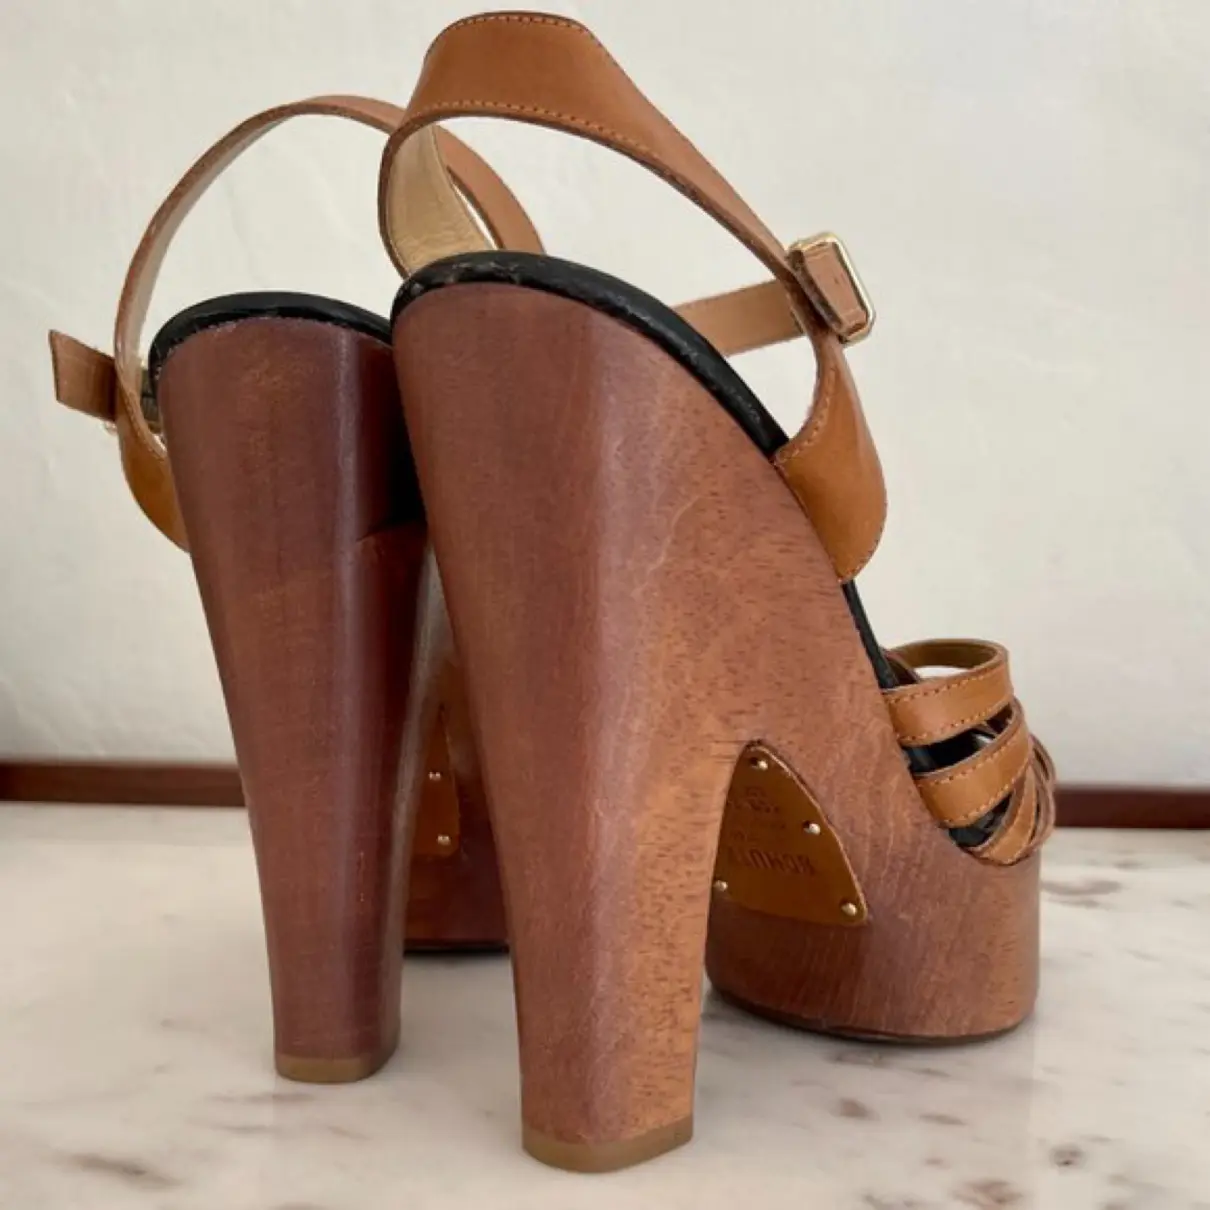 Buy Schutz Leather sandals online